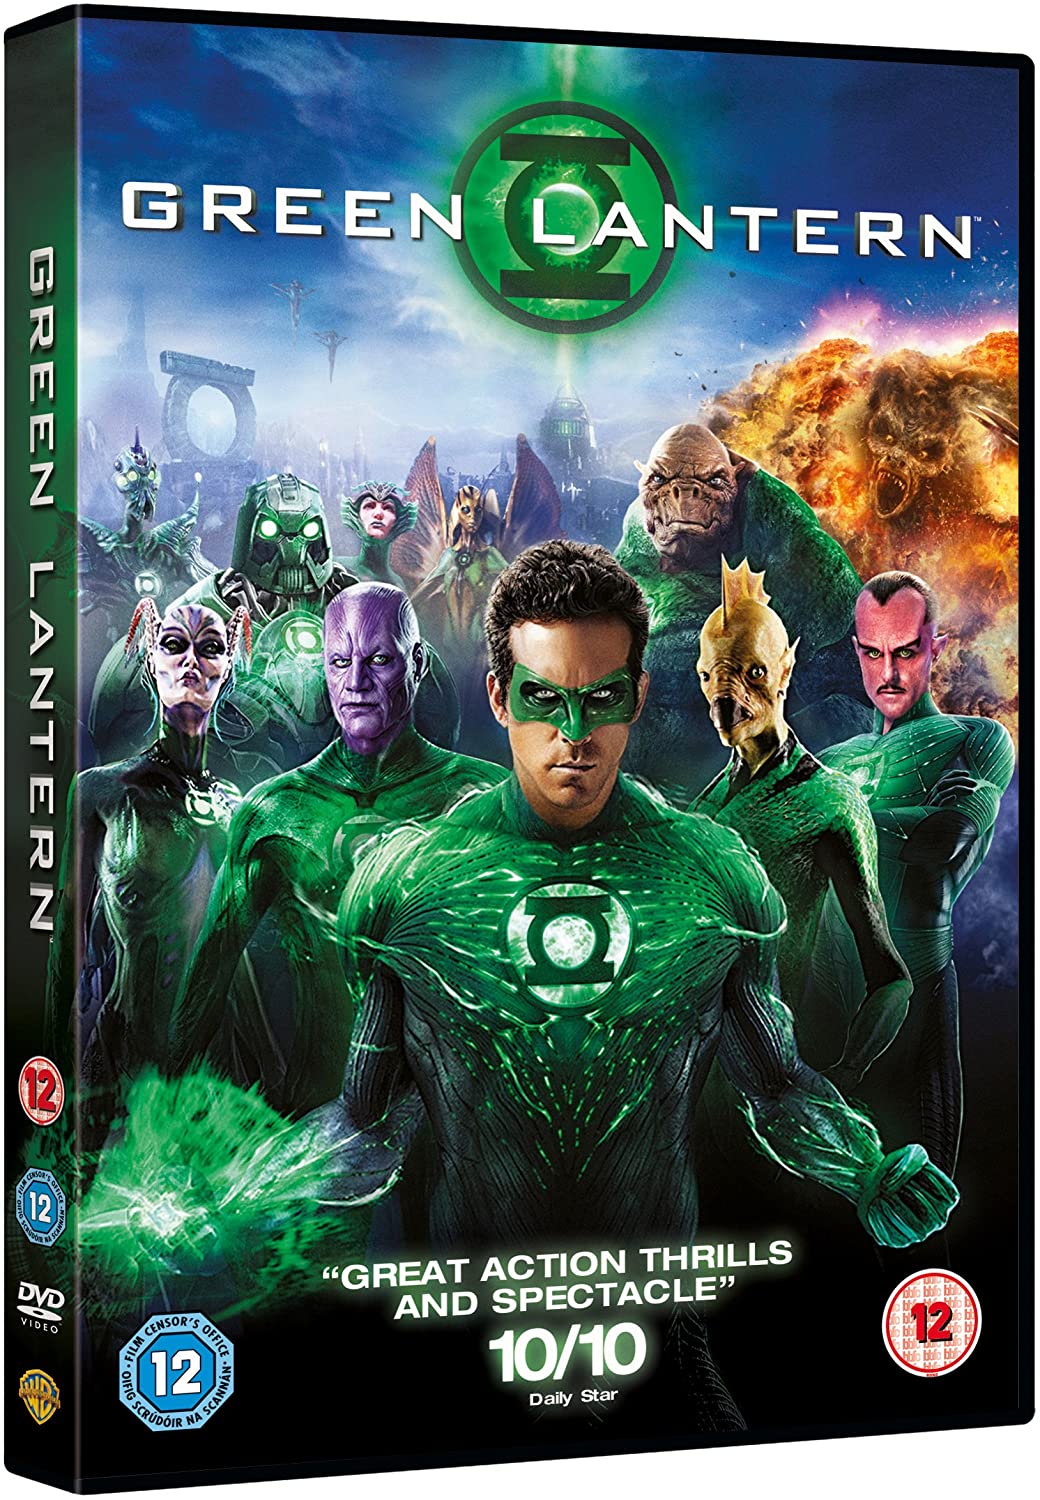 Green Lantern [2011] - Action/Adventure [DVD]